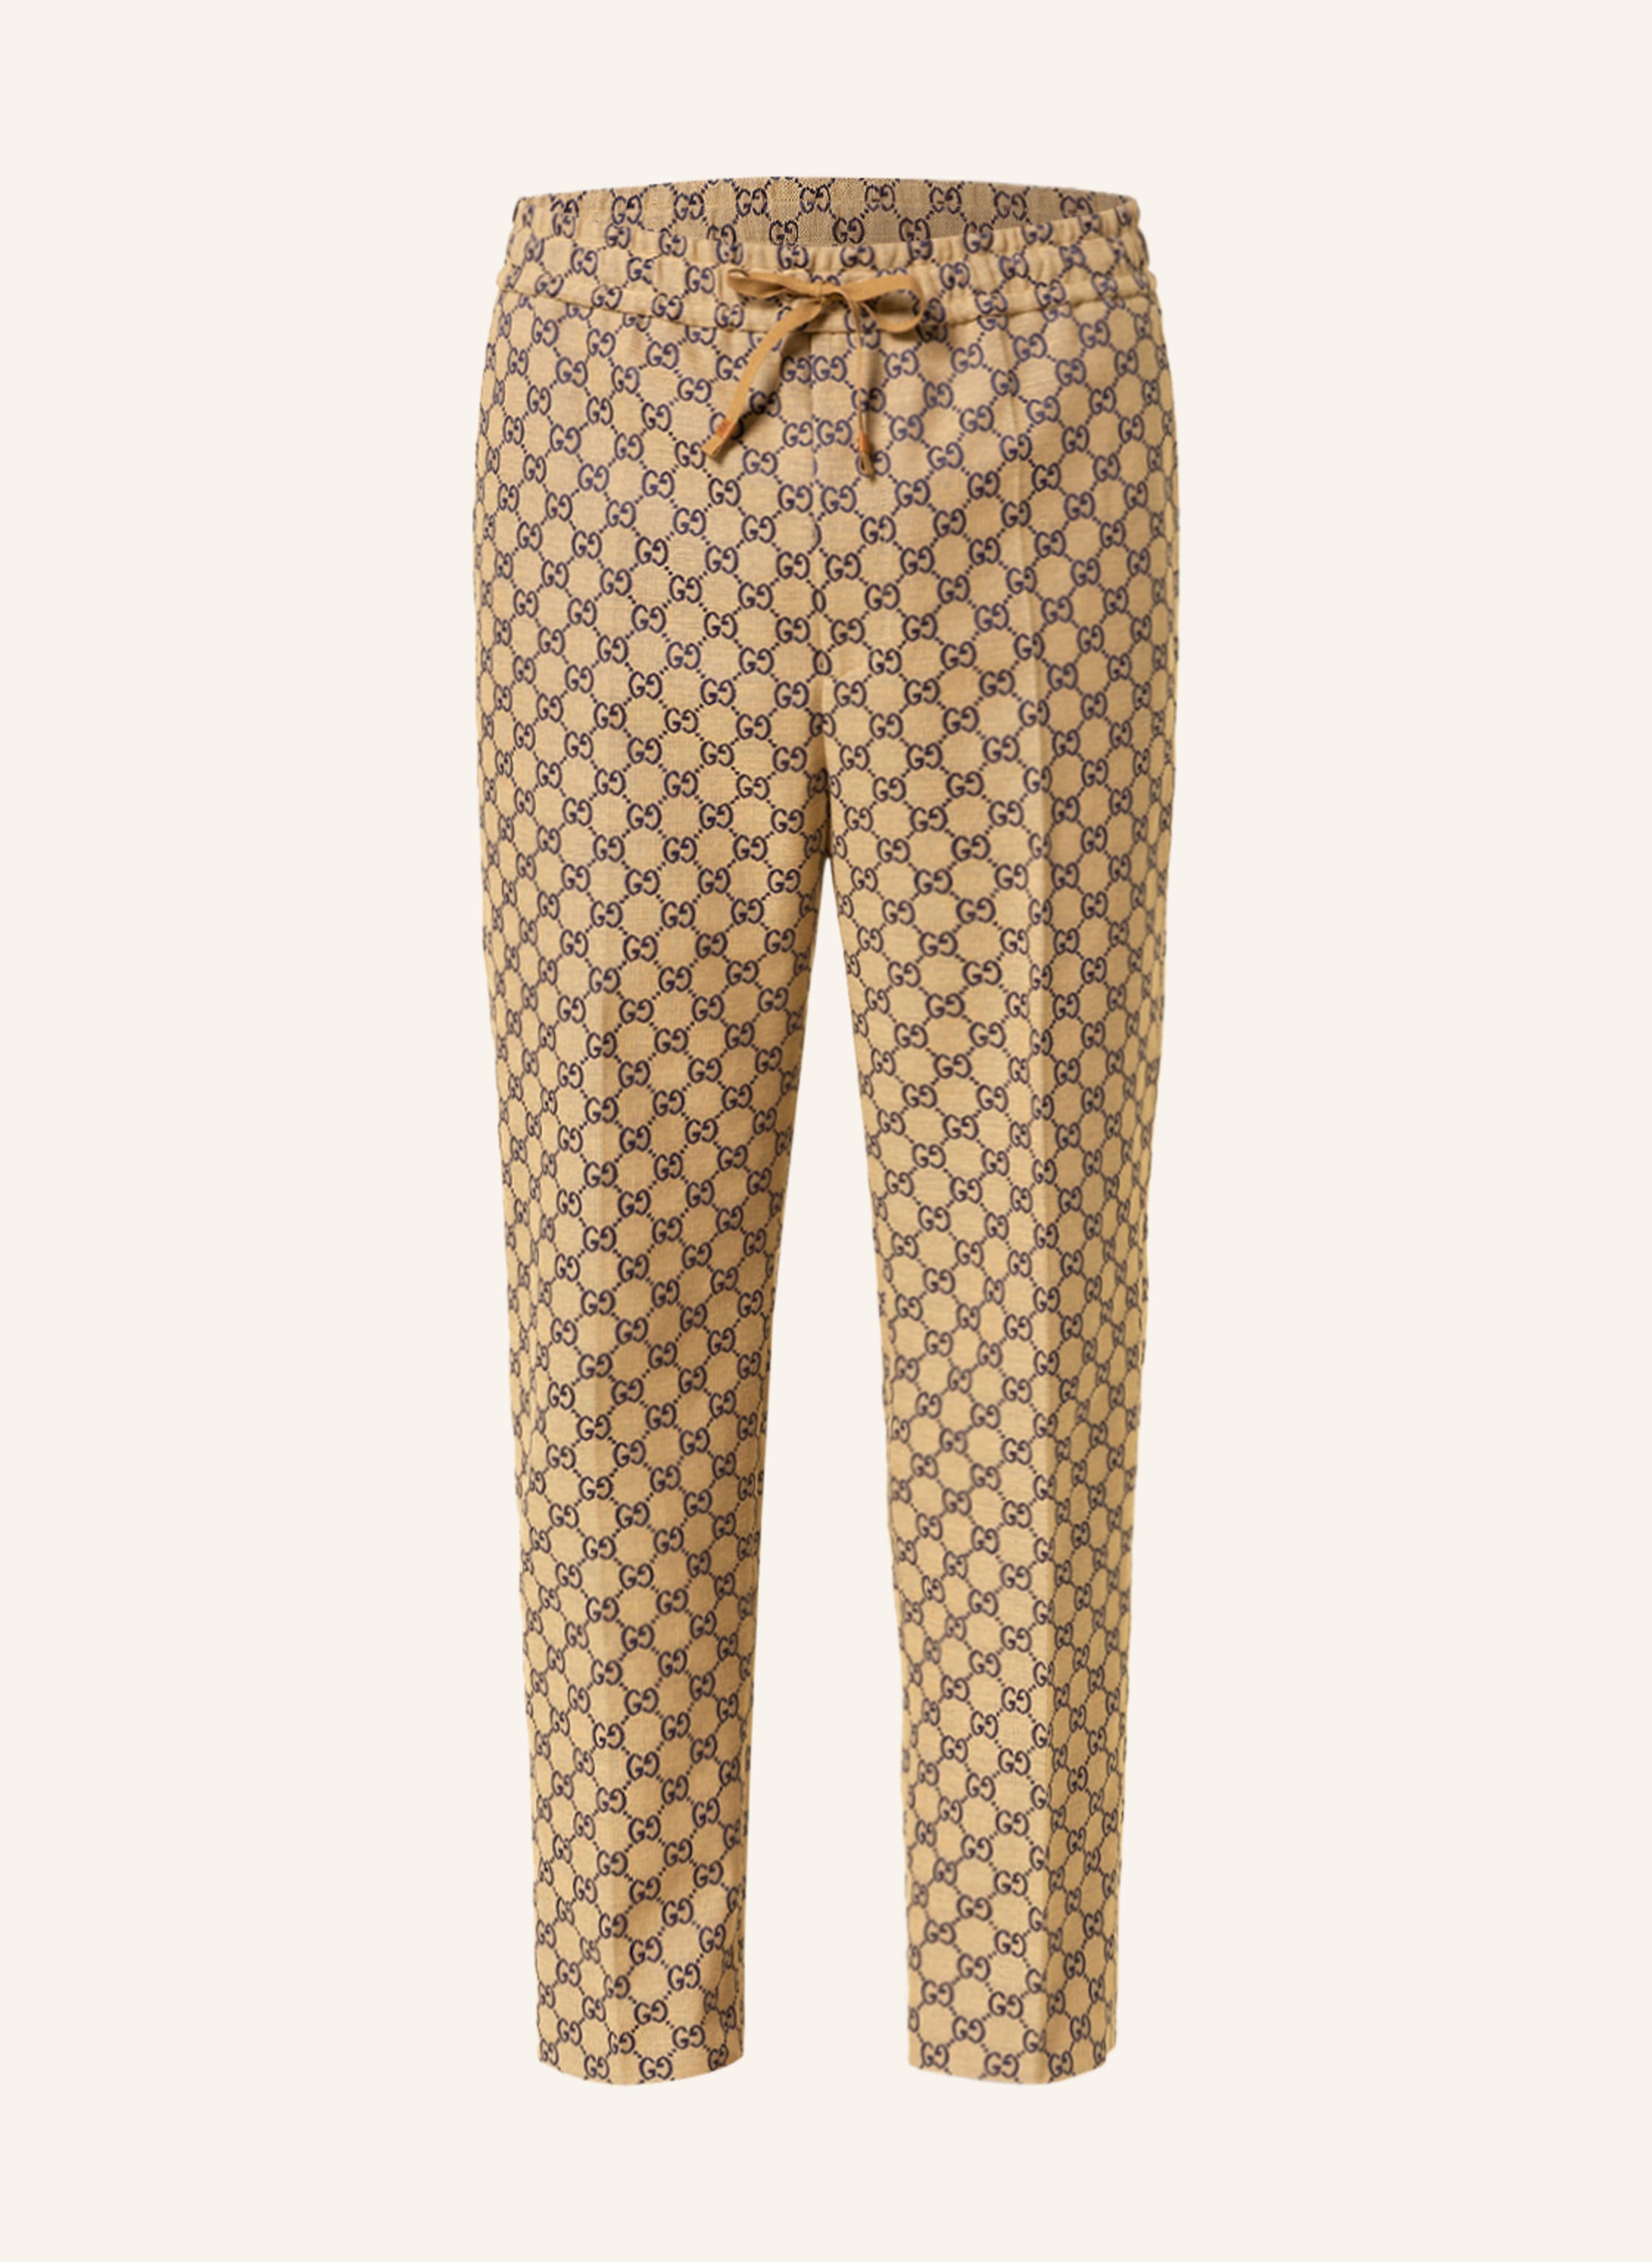 Gucci Pants for Women  Shop on FARFETCH